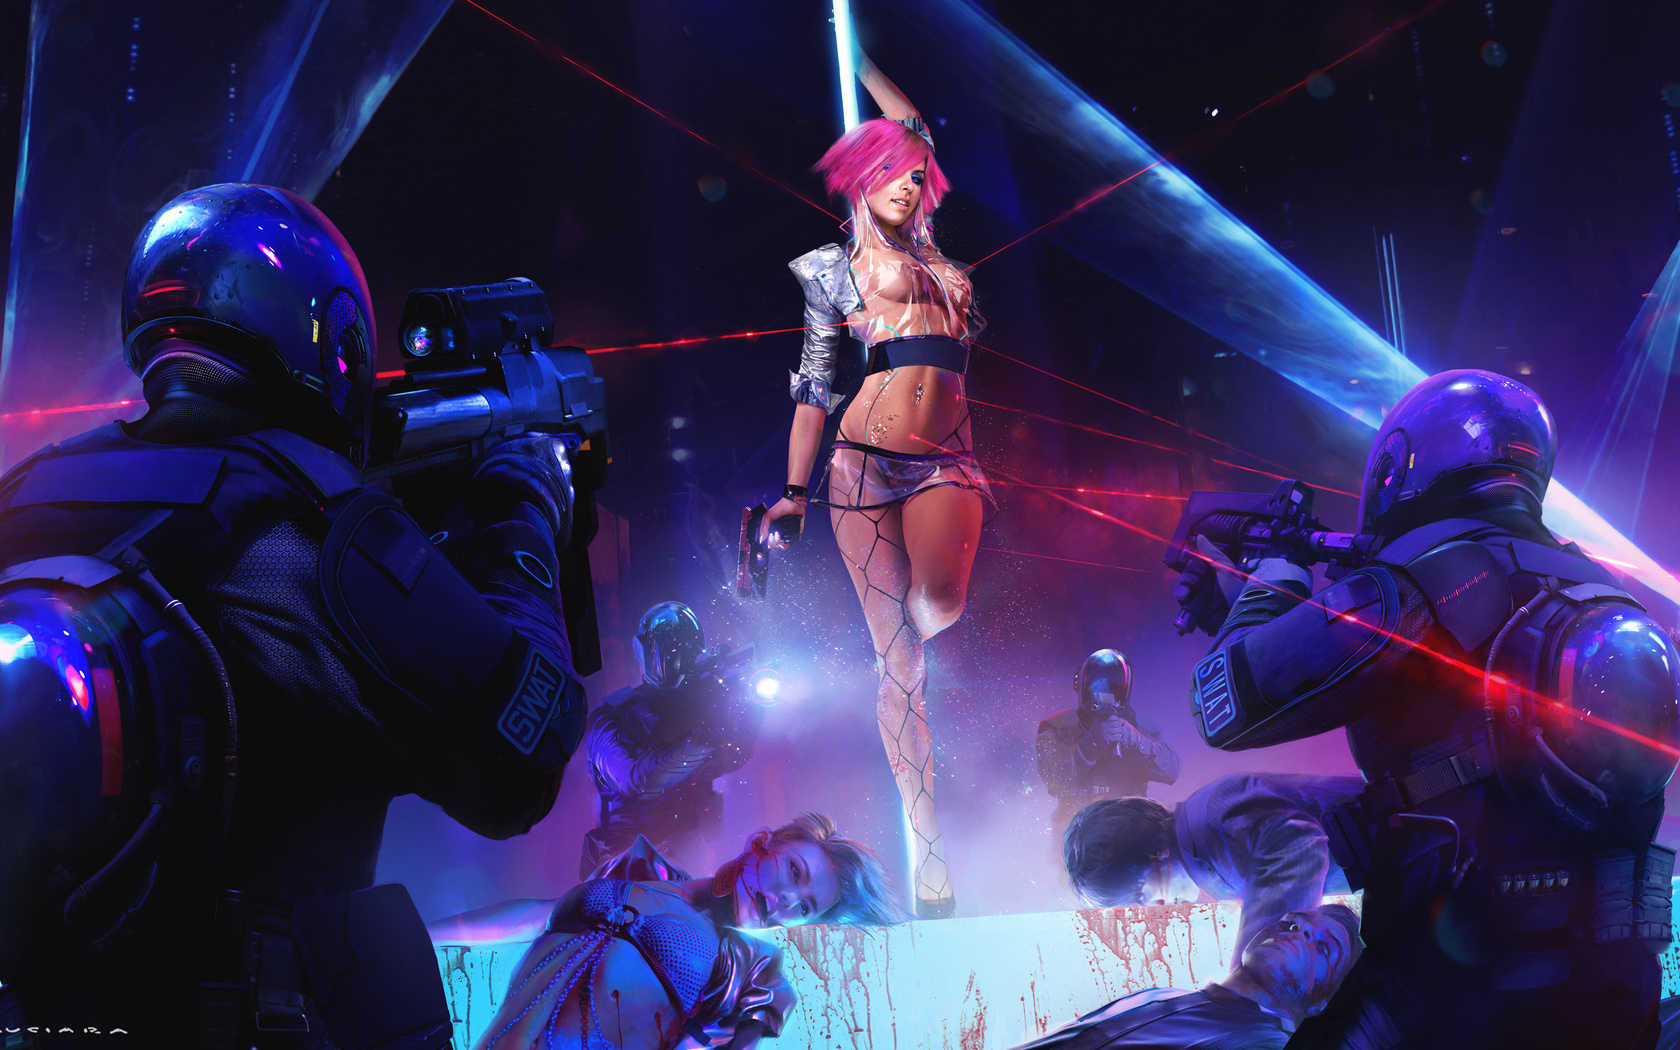 cyberpunk, cyberpunk 2077, exotic dancer, swat, laser